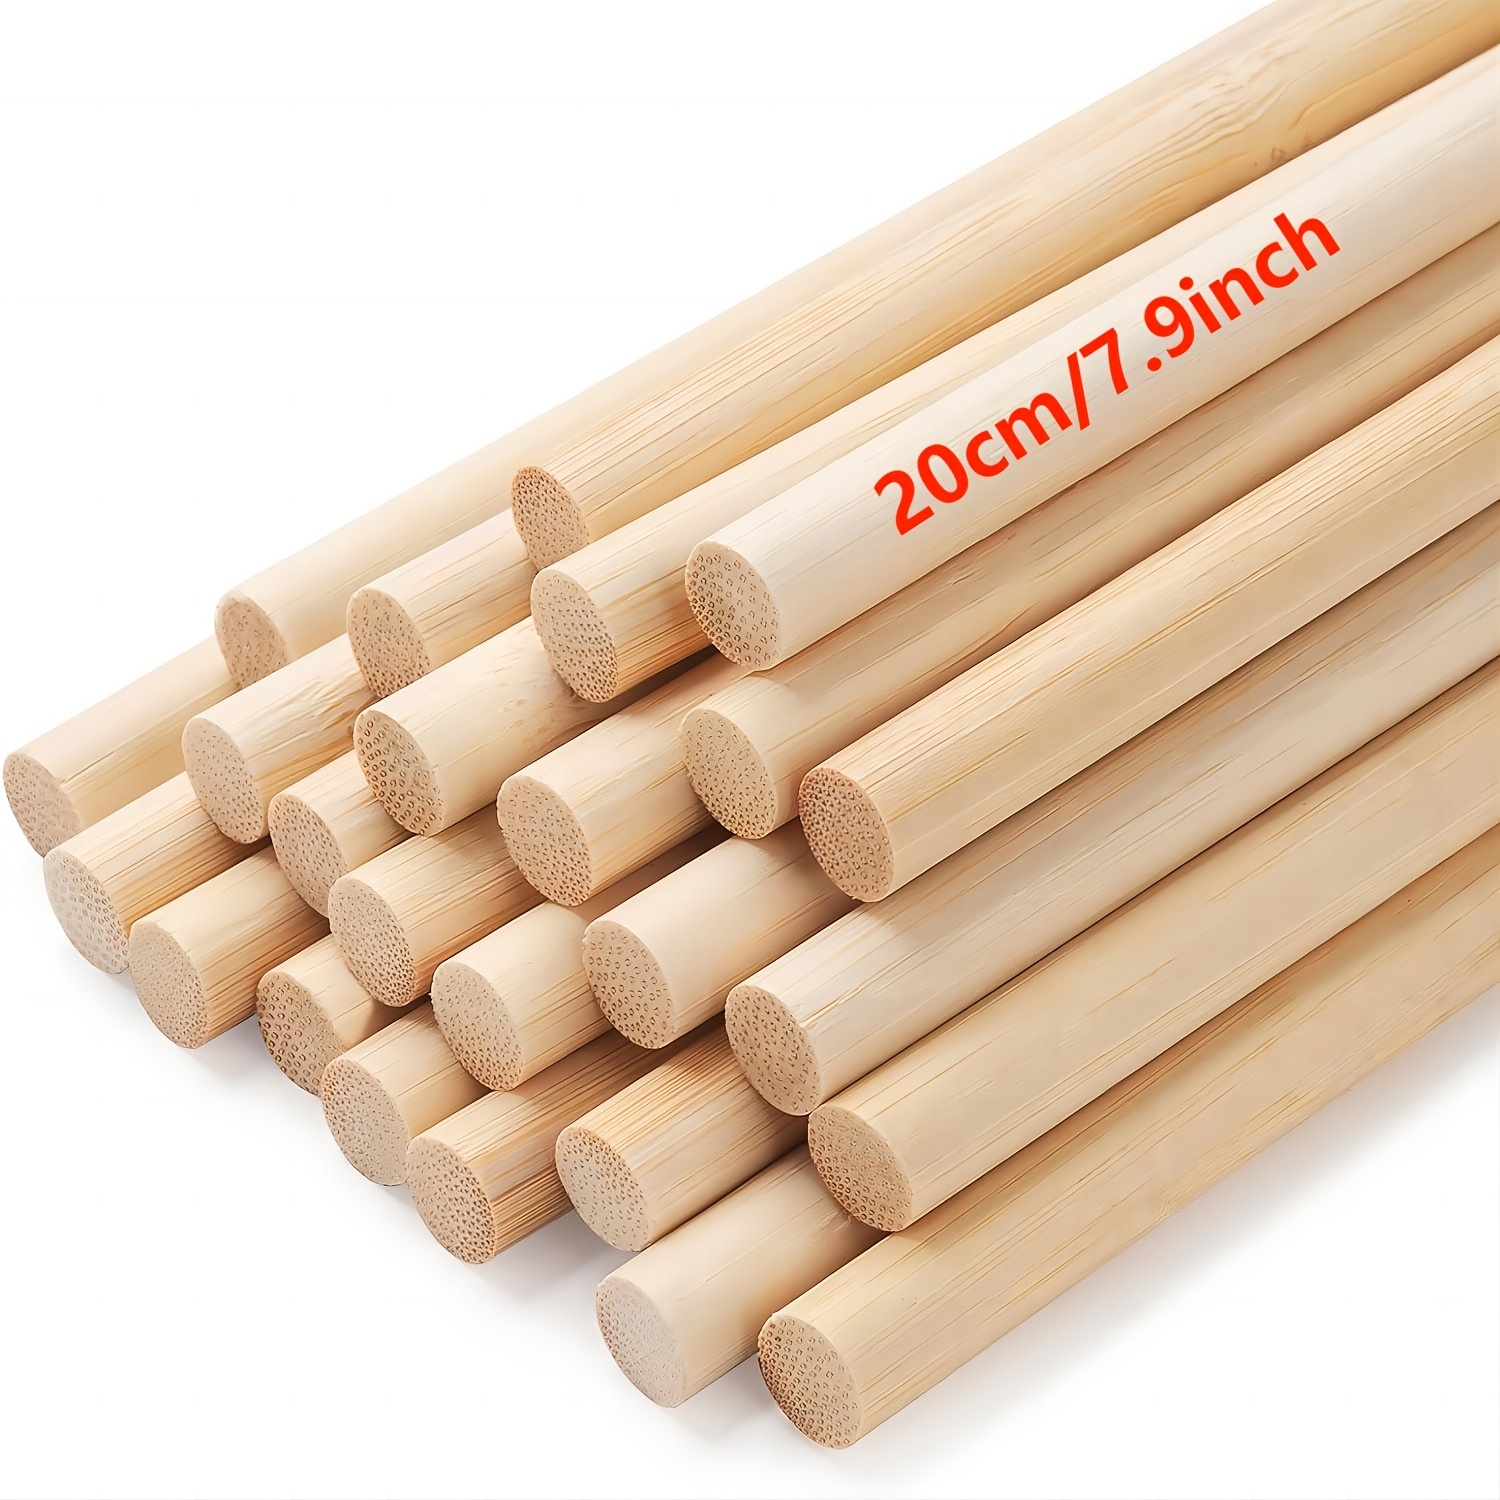 50 PCS Dowel Rods Wood Sticks Wooden Dowel Rods - 1/2 x 48 Inch